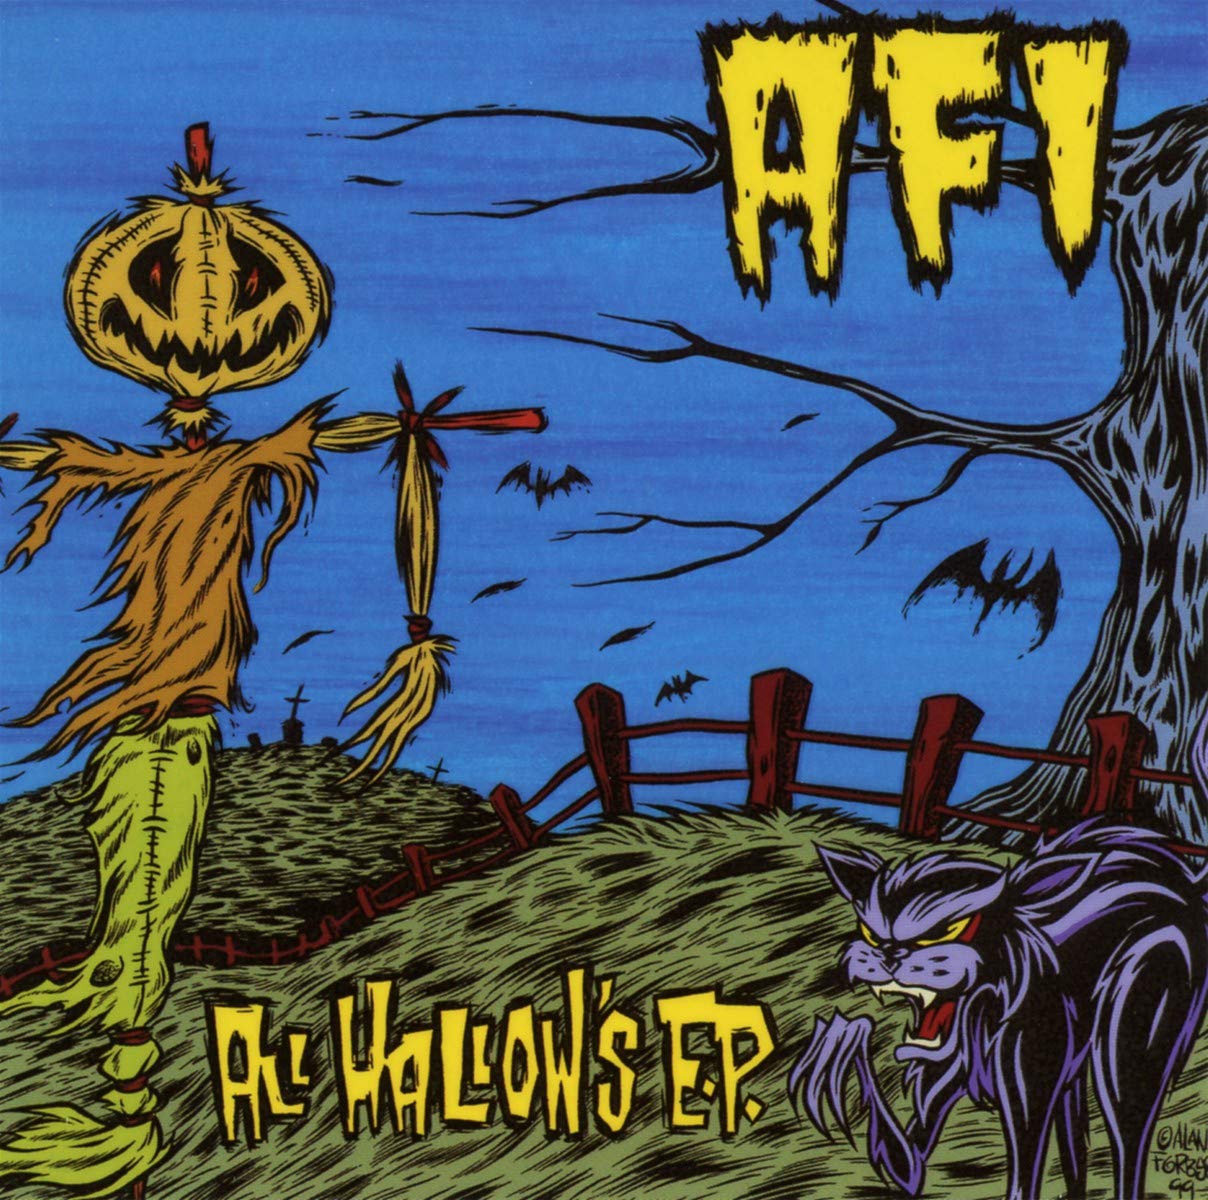 AFI "All Hallow's EP" 10" Vinyl